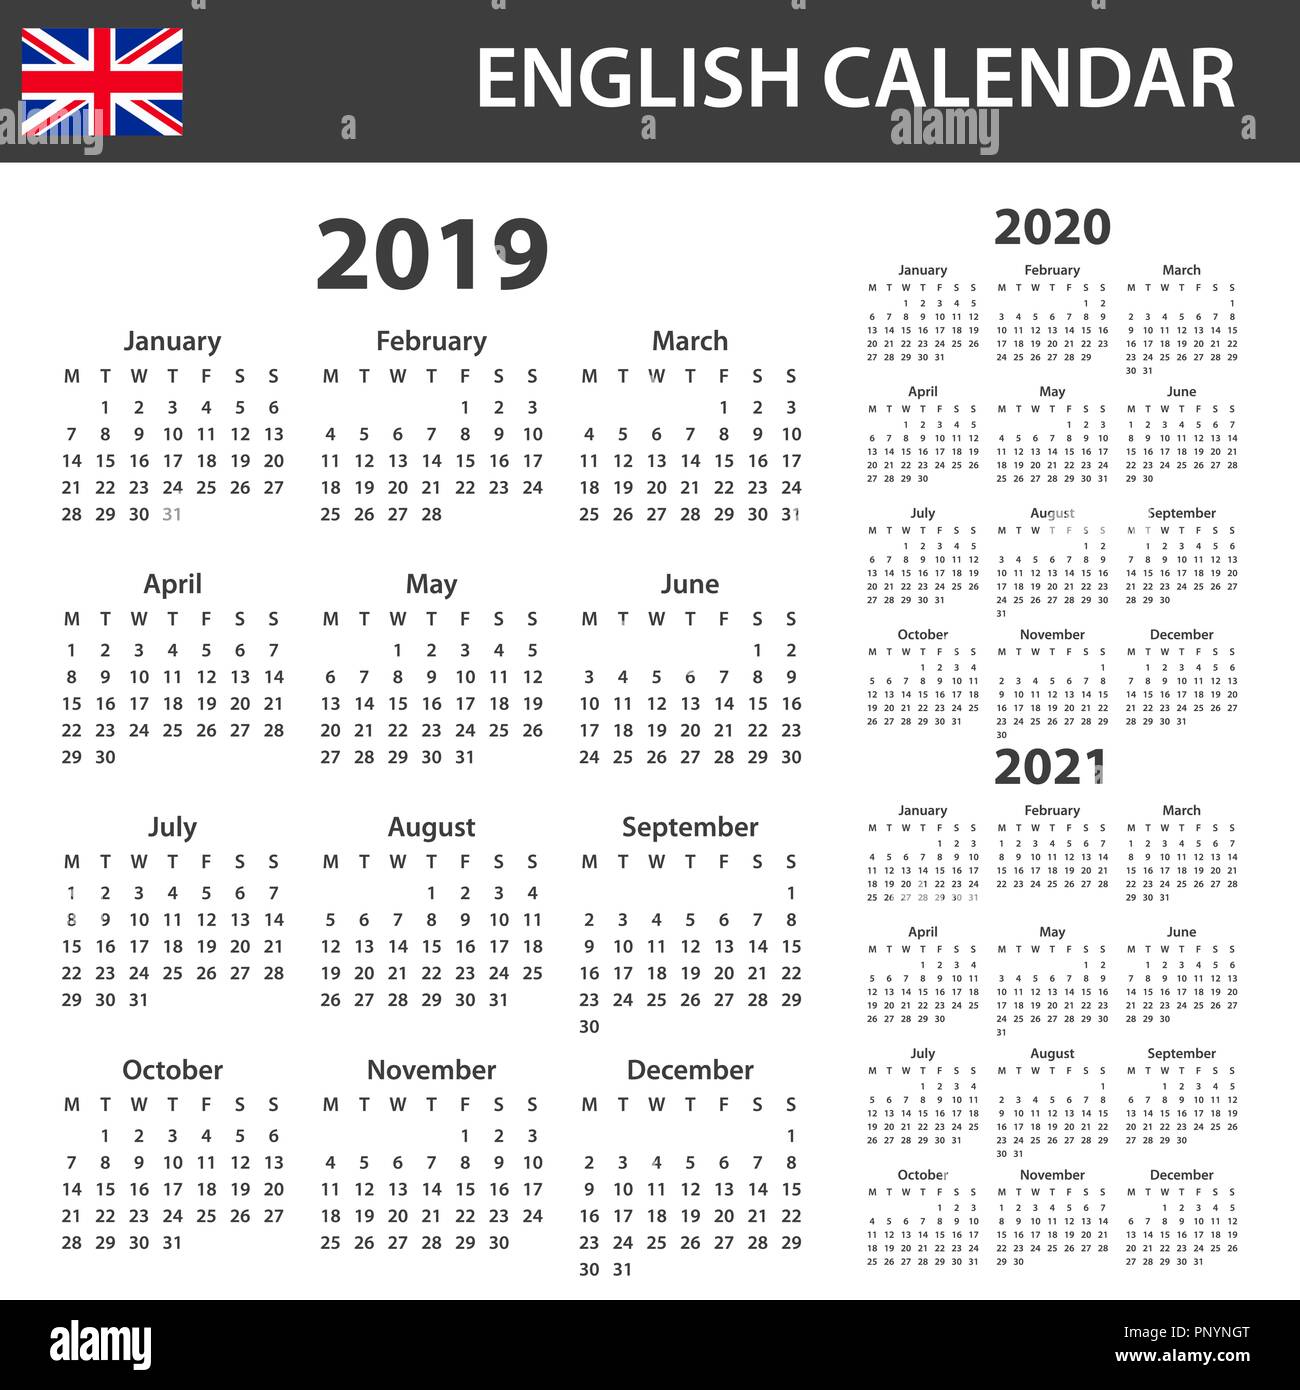 agenda calendar 2021 English Calendar For 2019 2020 And 2021 Scheduler Agenda Or Diary Template Week Starts On Monday Stock Vector Image Art Alamy agenda calendar 2021